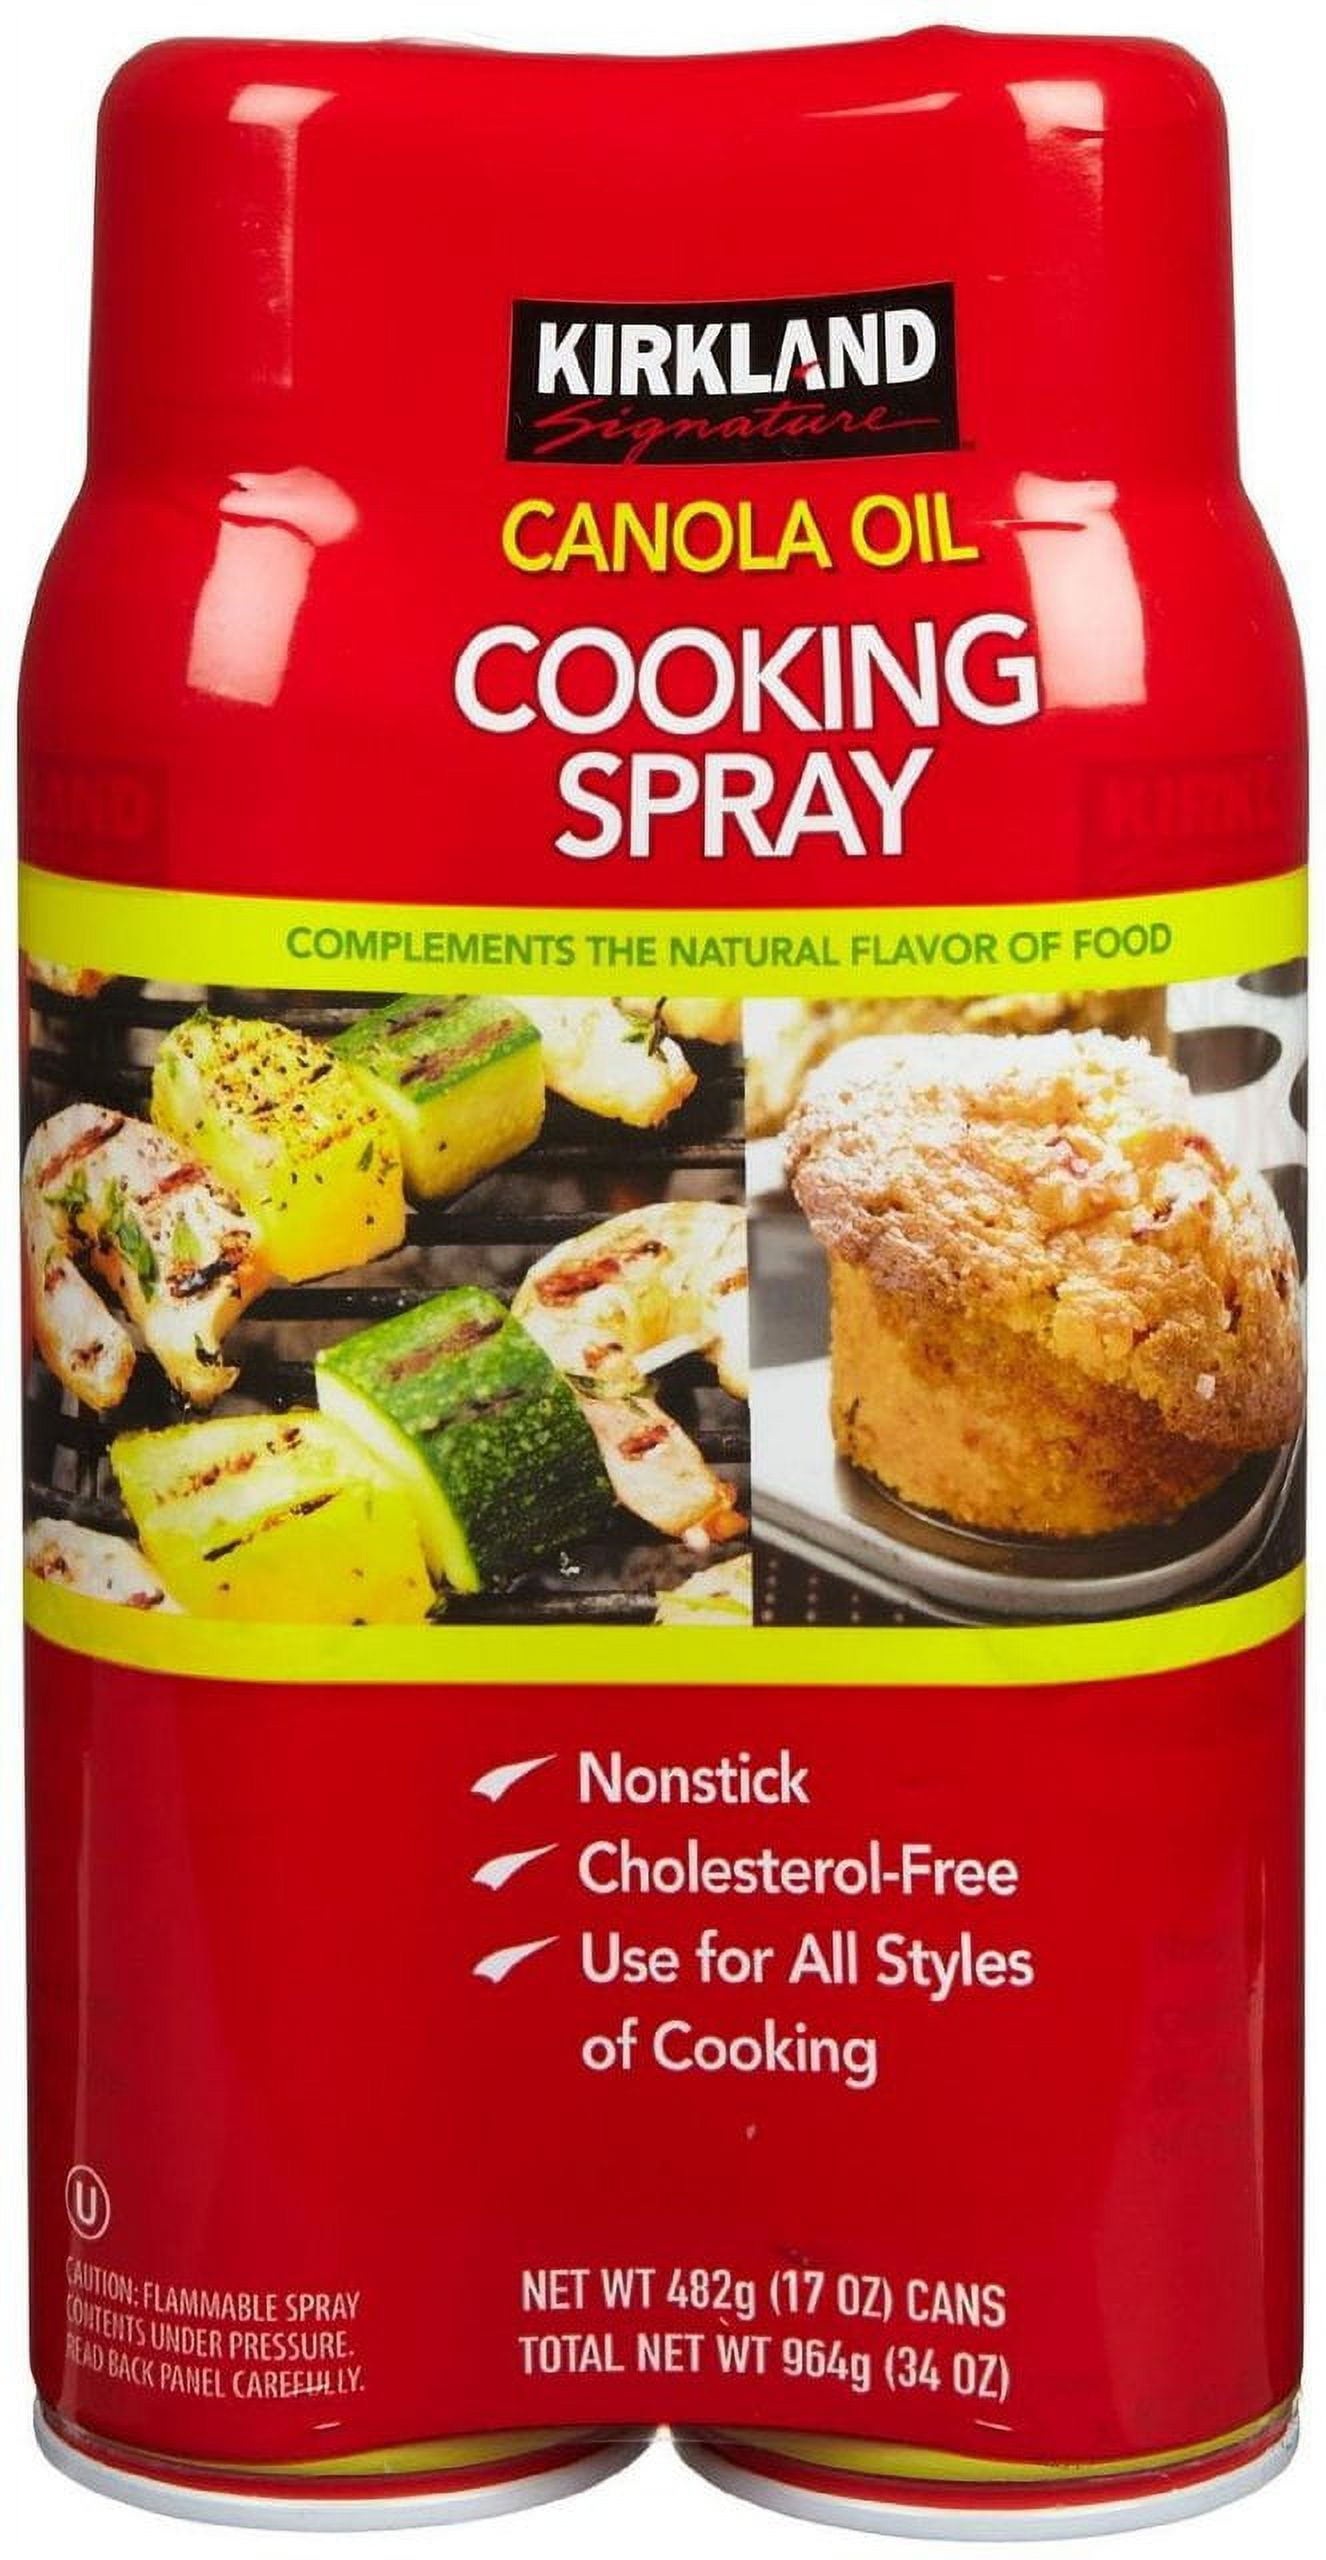 Cooking spray - Kirkland - 454g